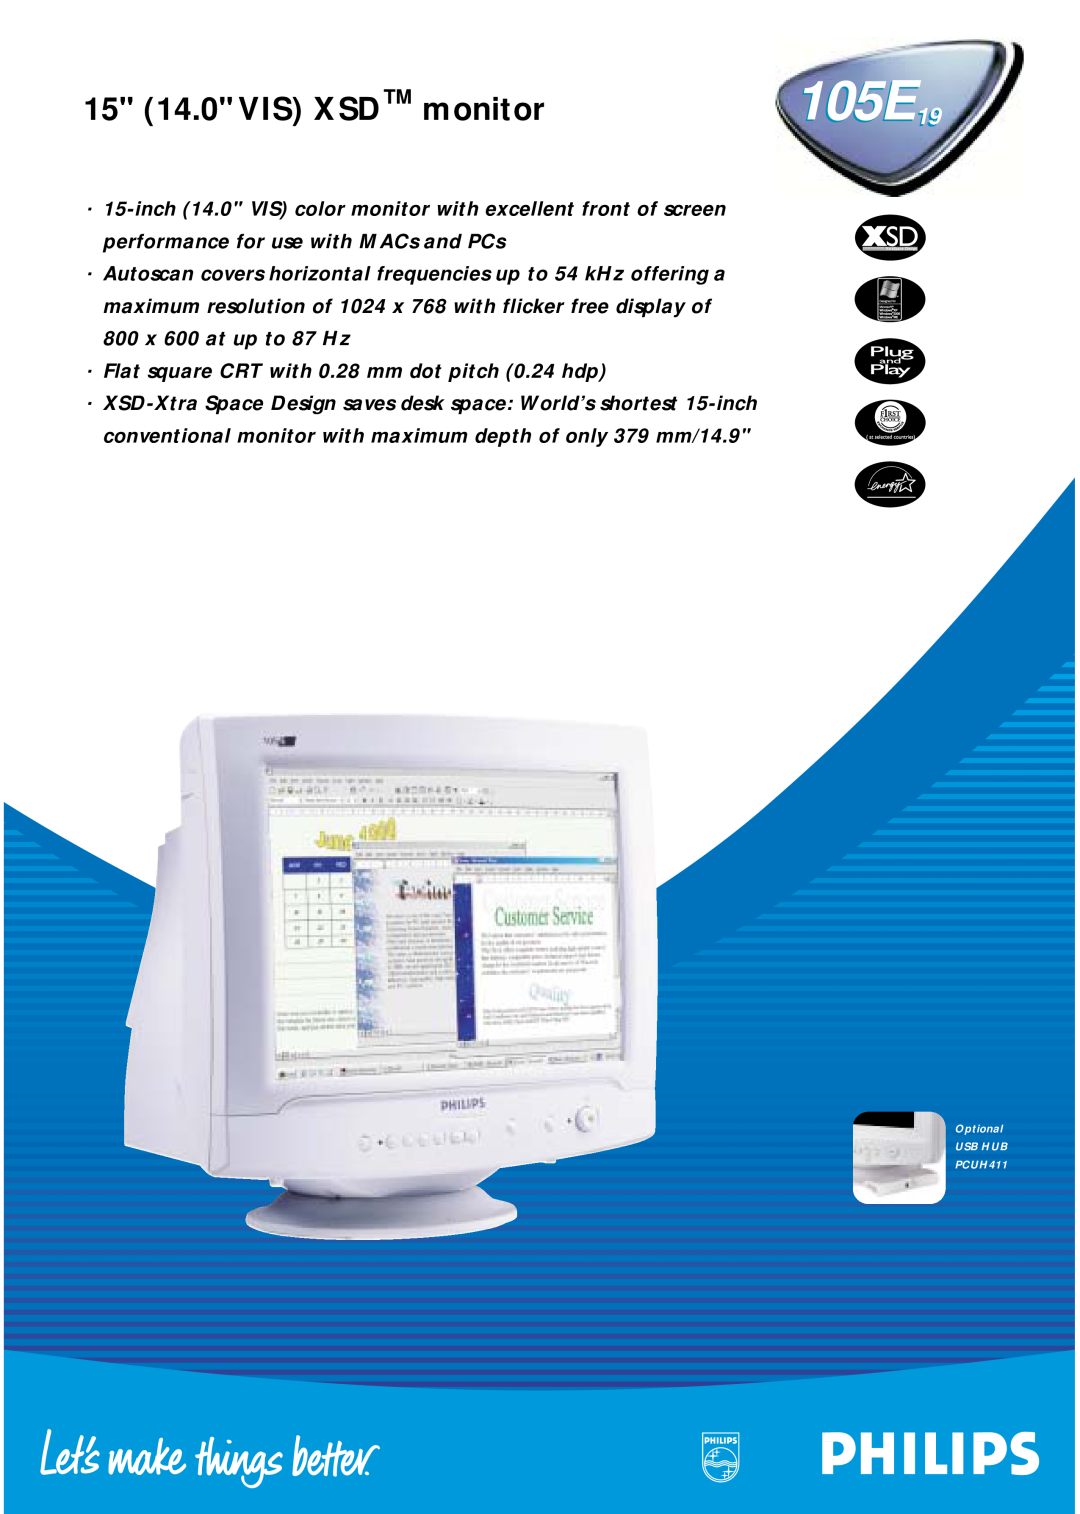 Philips manual 15 14.0 VIS XSD monitor, 105E1911 